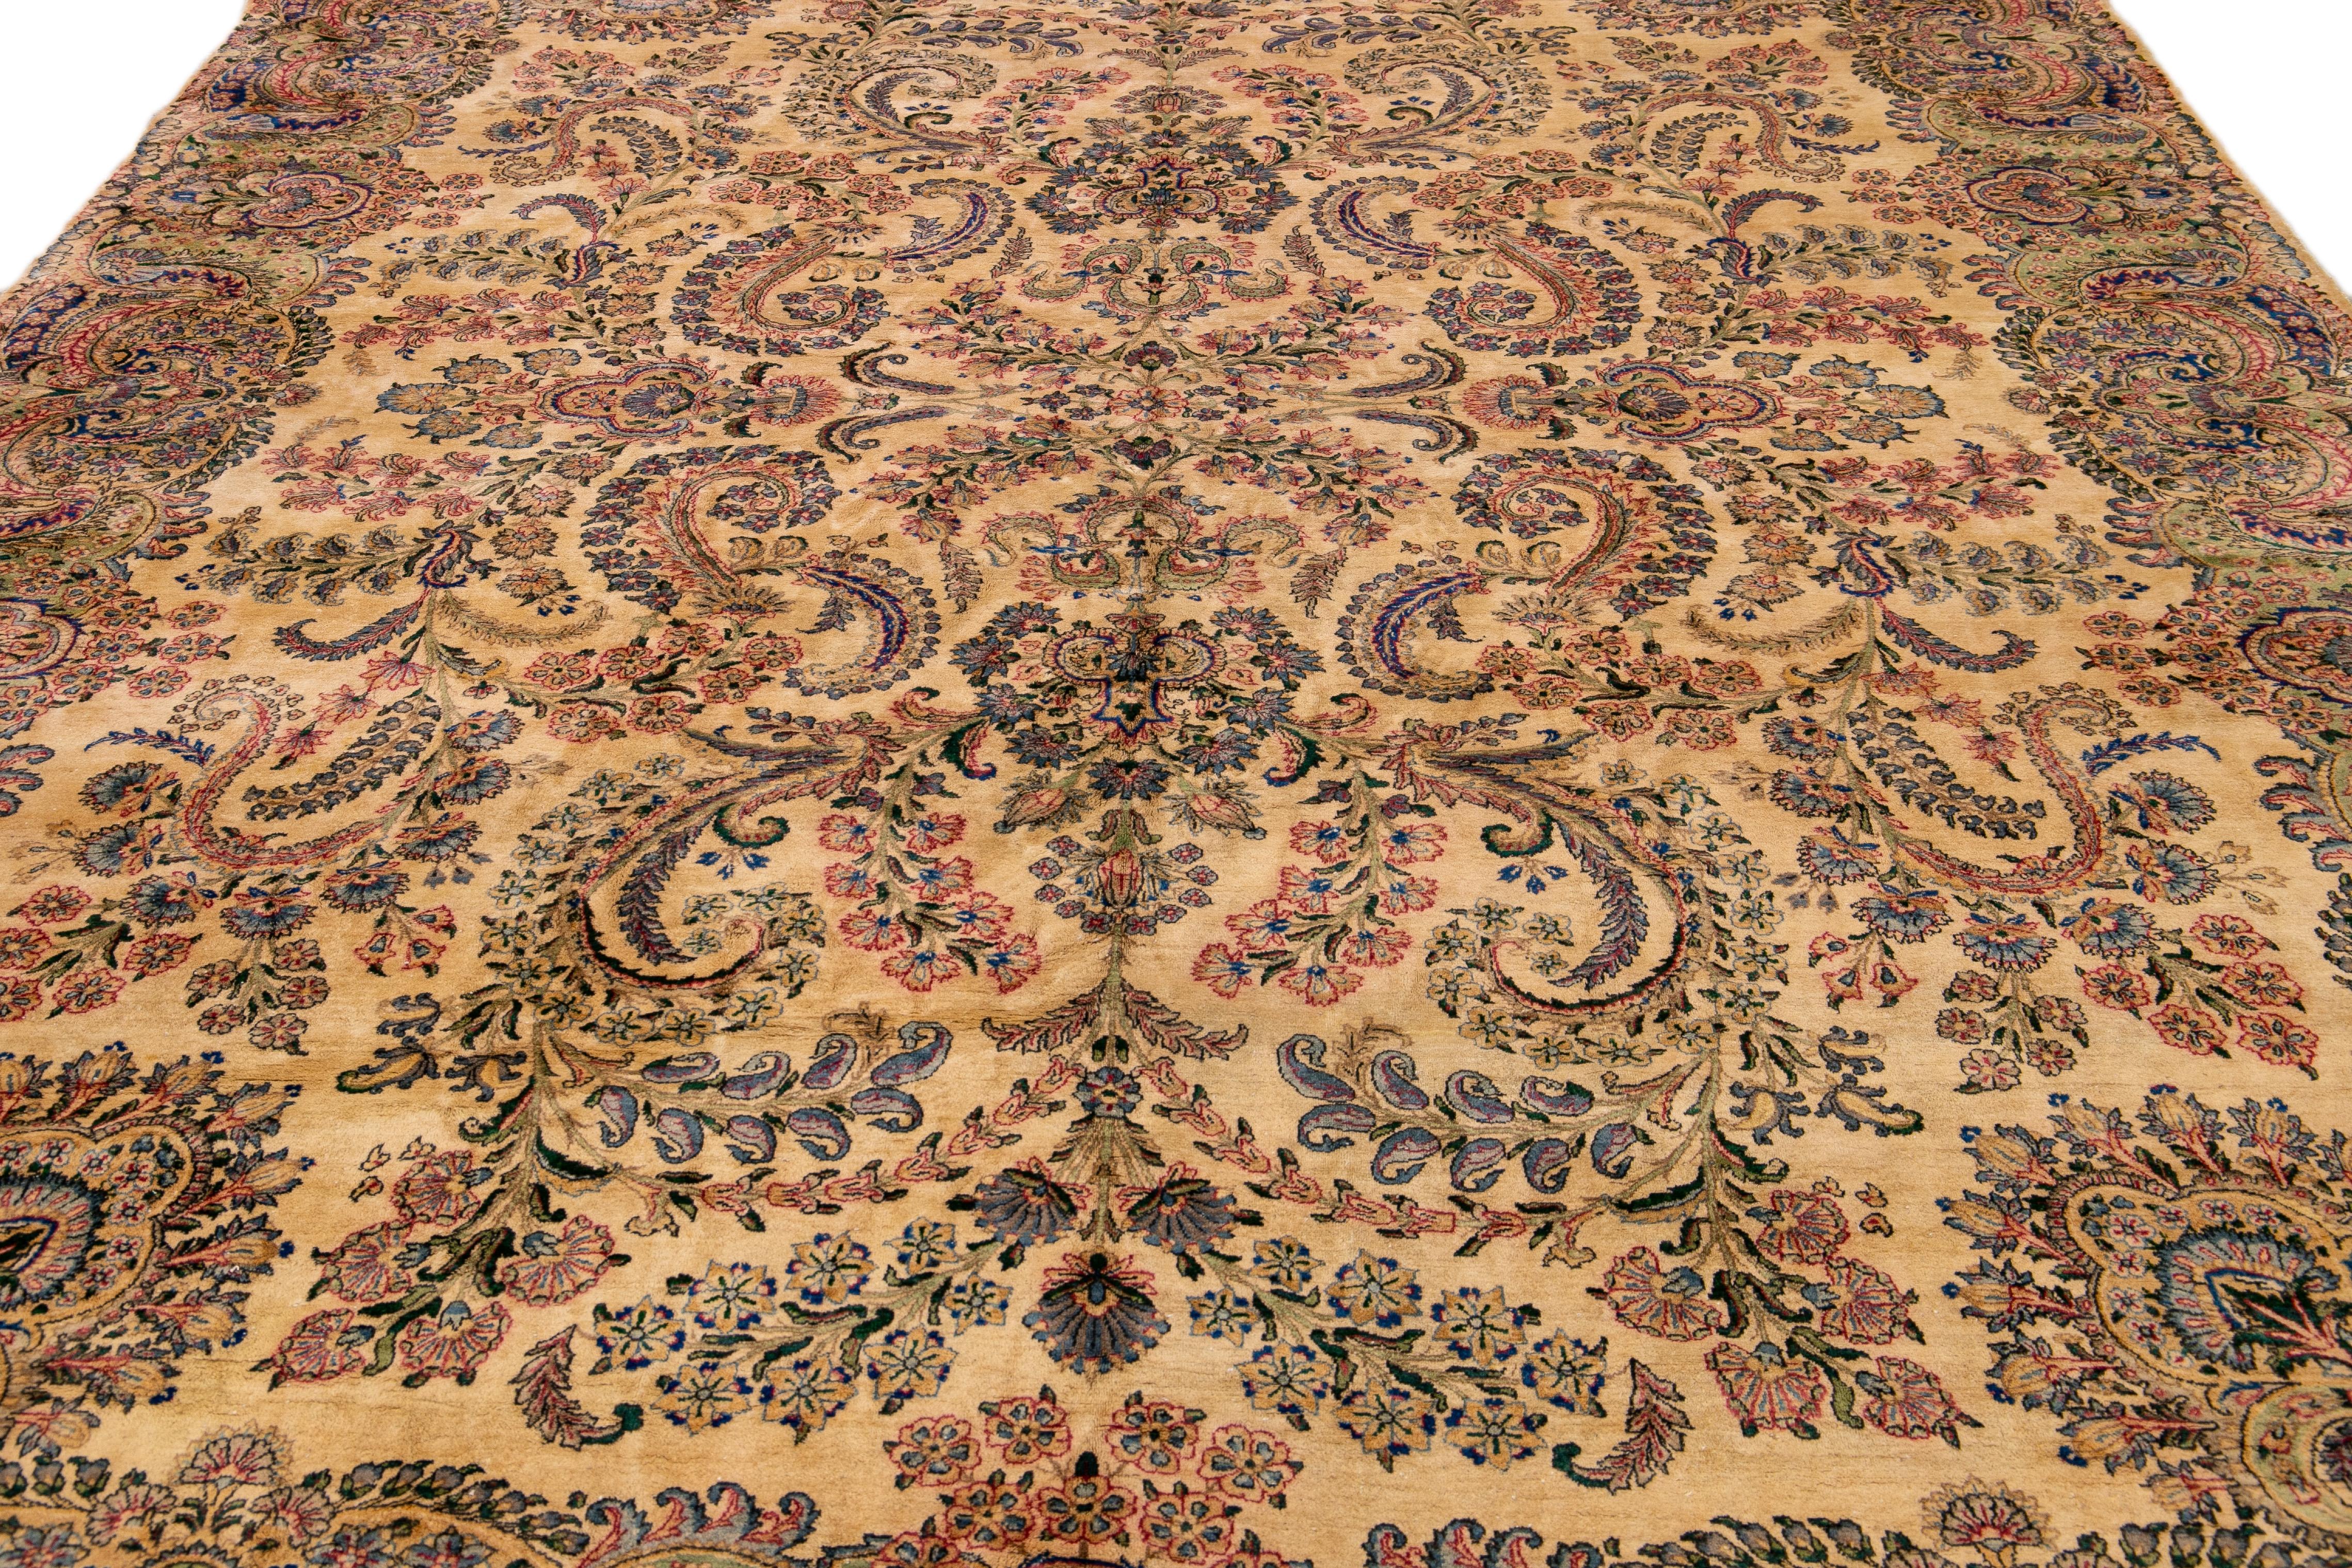 Islamic Tan Antique Kerman Handmade Allover Floral Designed Wool Rug For Sale